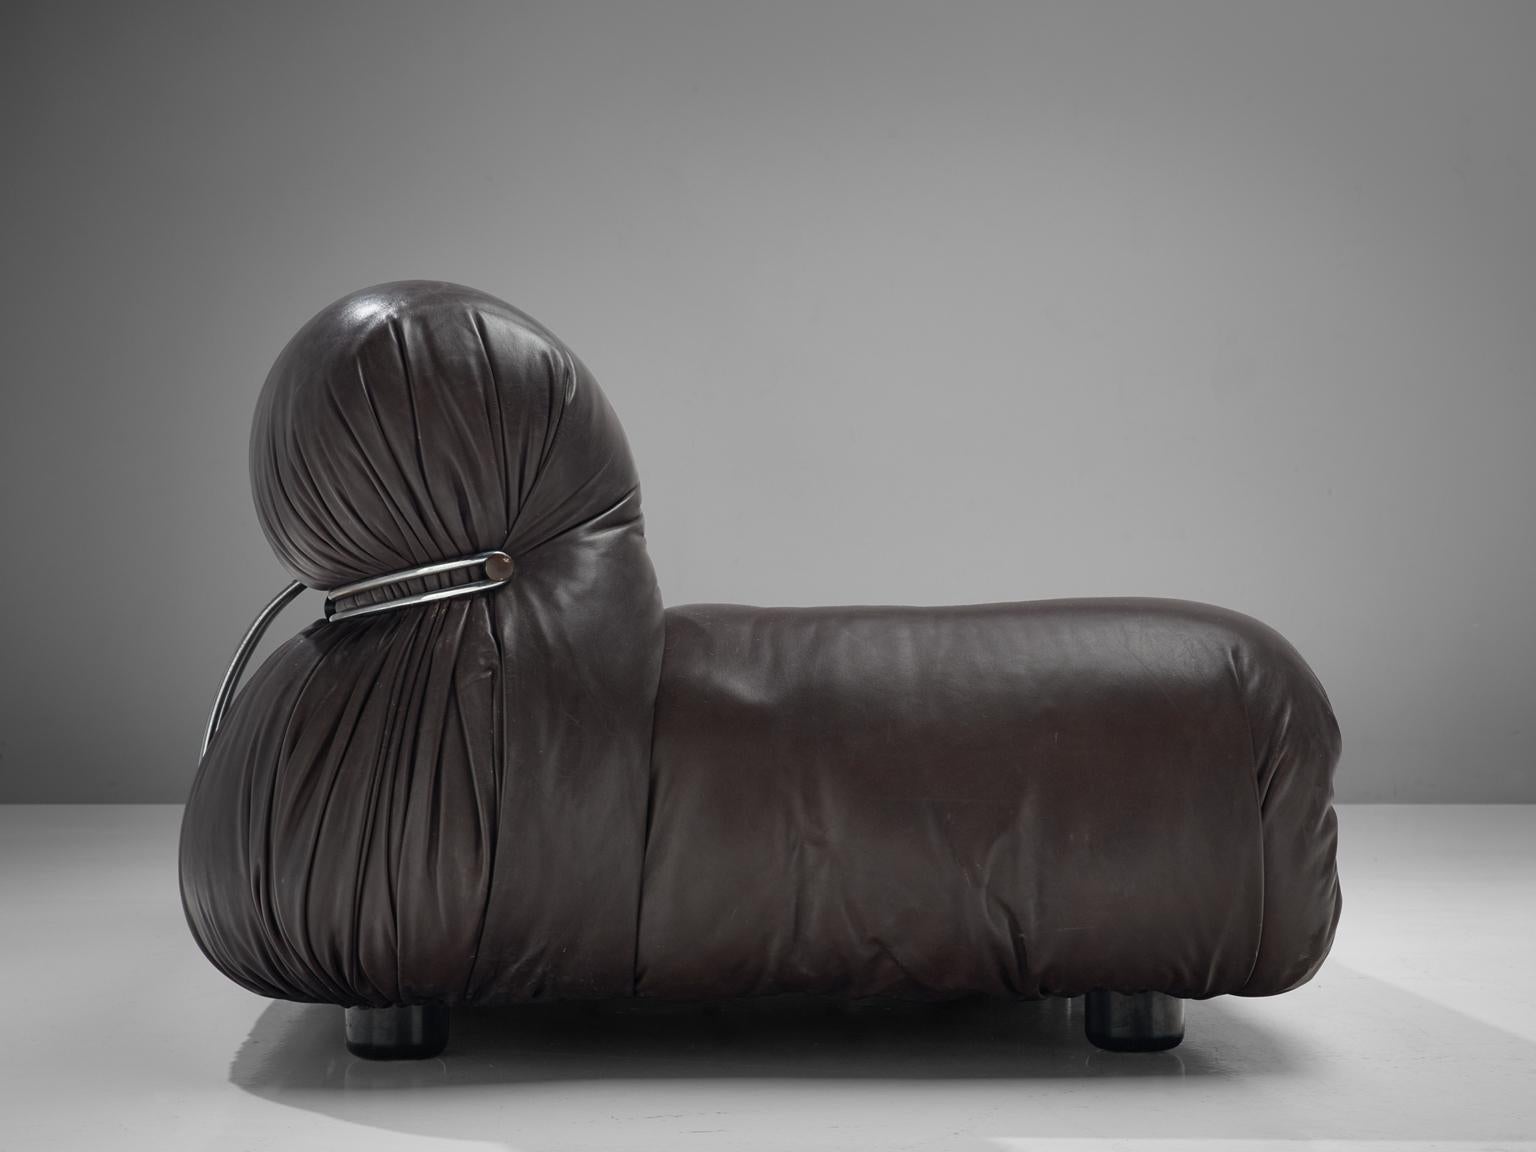 Italian Afra & Tobia Scarpa 'Soriana' Sofa in Chocolate Brown Leather